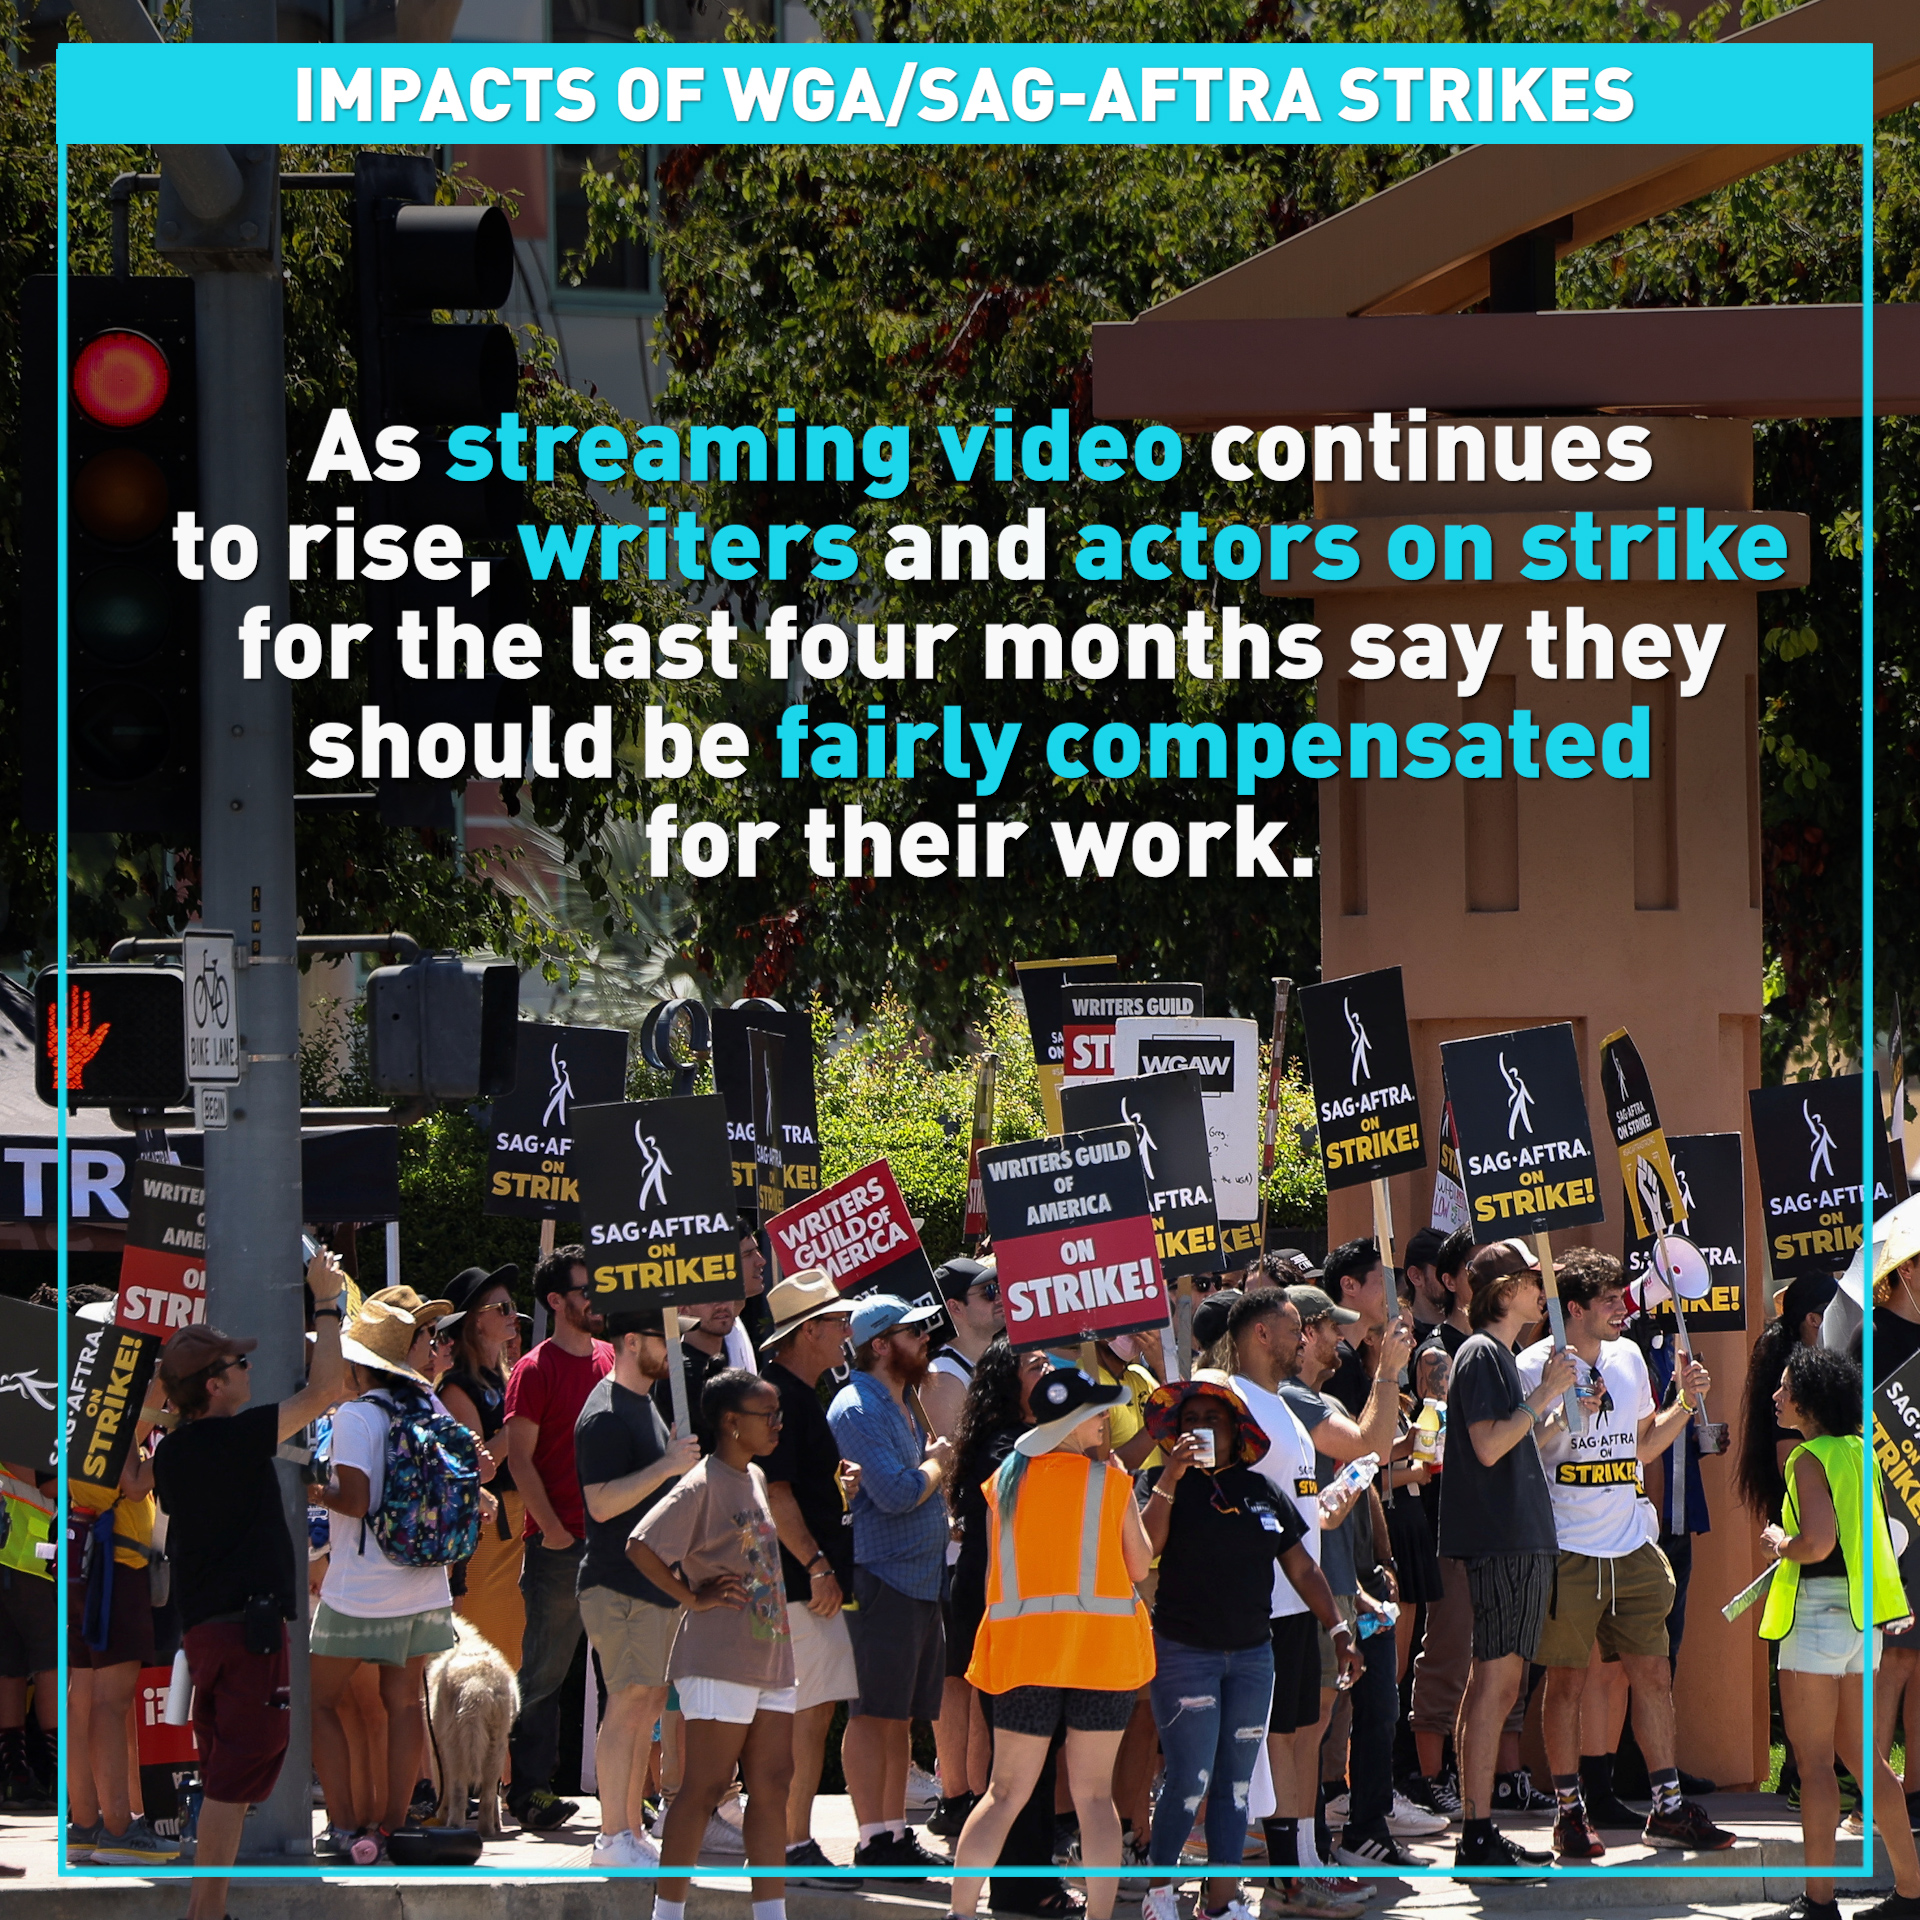  Impact of WGA/ SAG-AFTRA strike ripples through industry